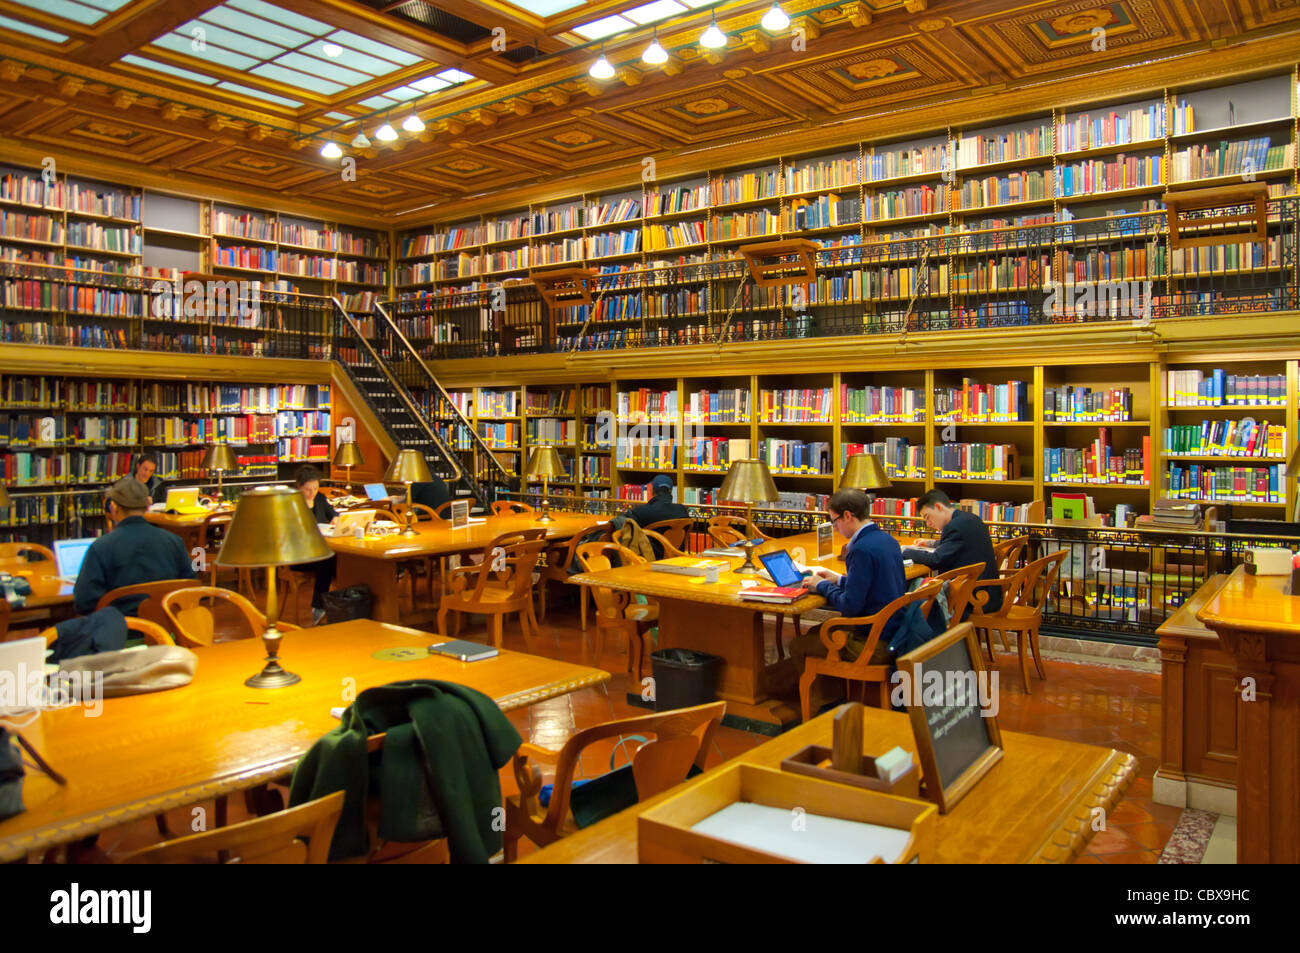 Kunst & Architektur Lesesaal Interieur in New York Public Library Stockfoto